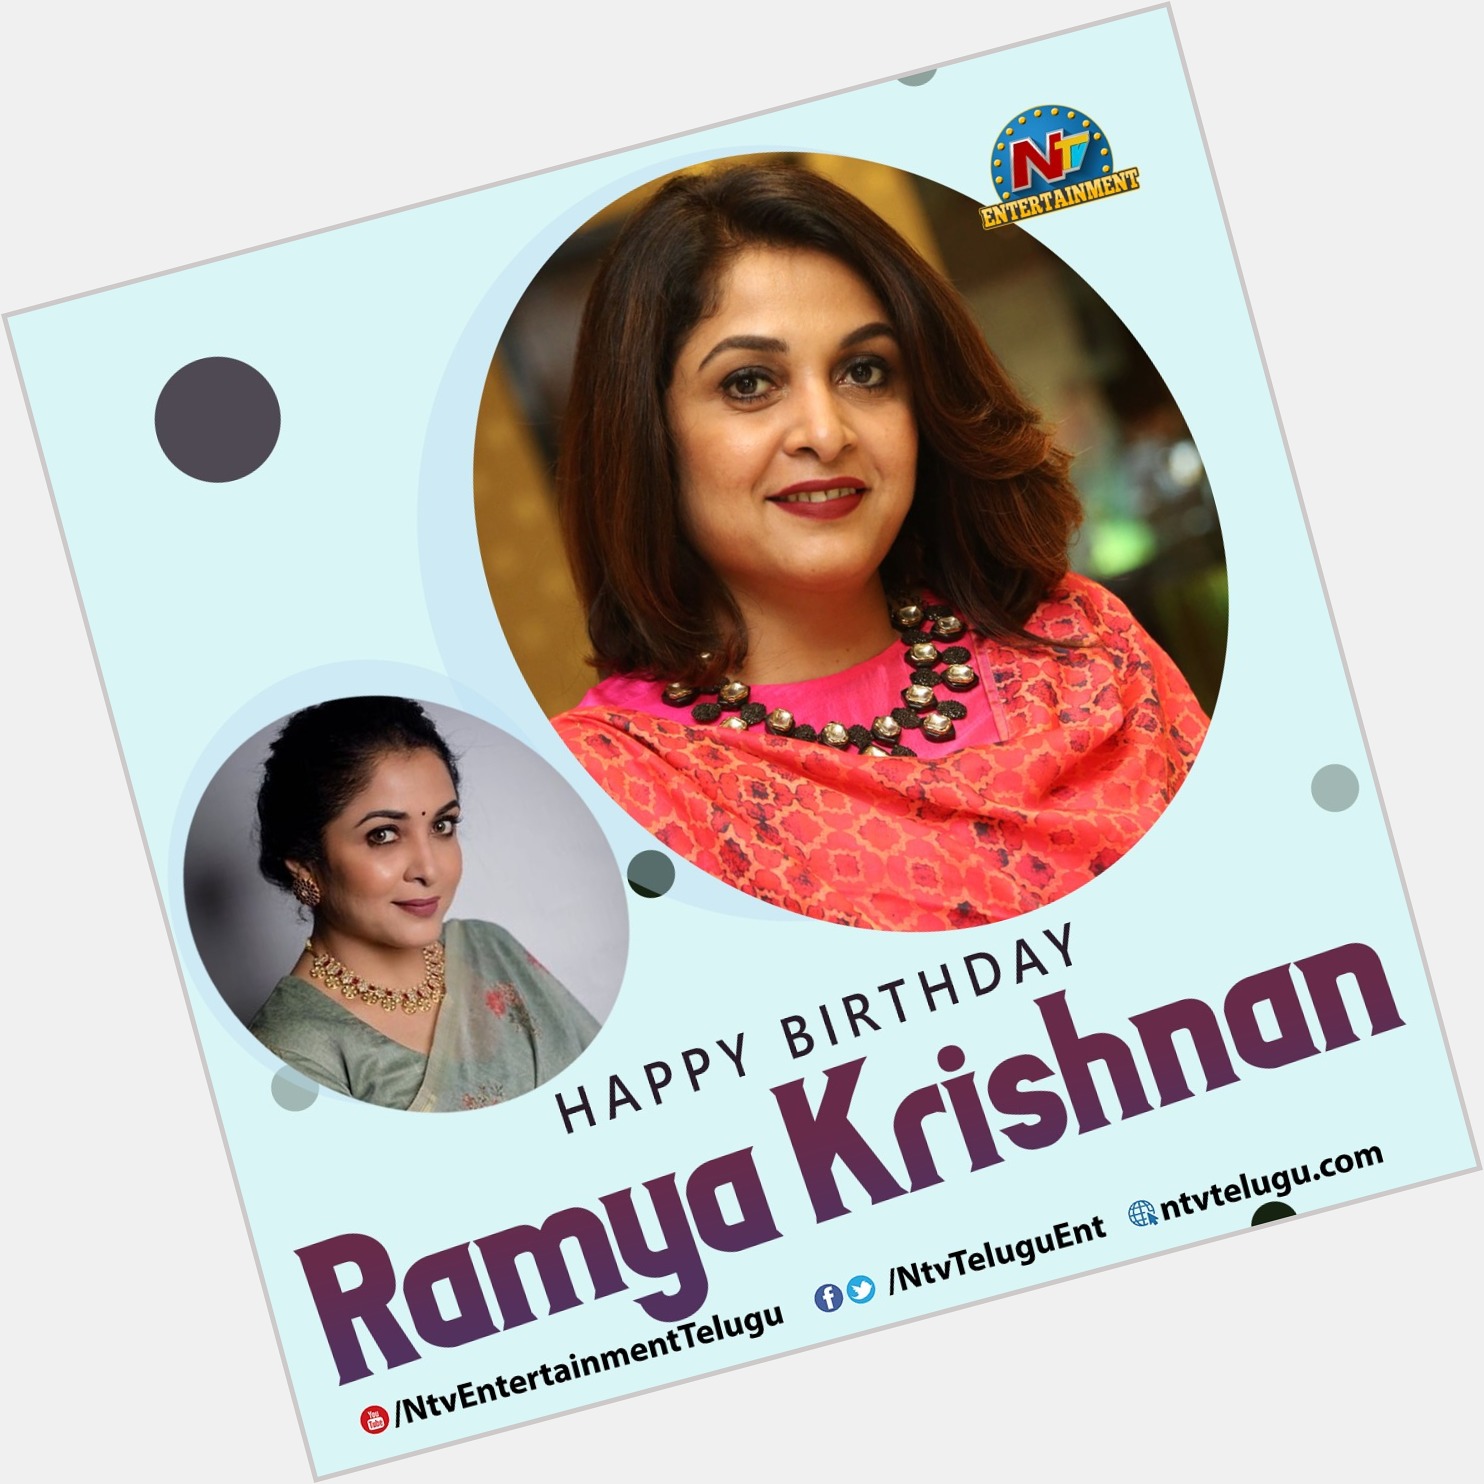 Wishing Ramya Krishnan a Very Happy Birthday!    